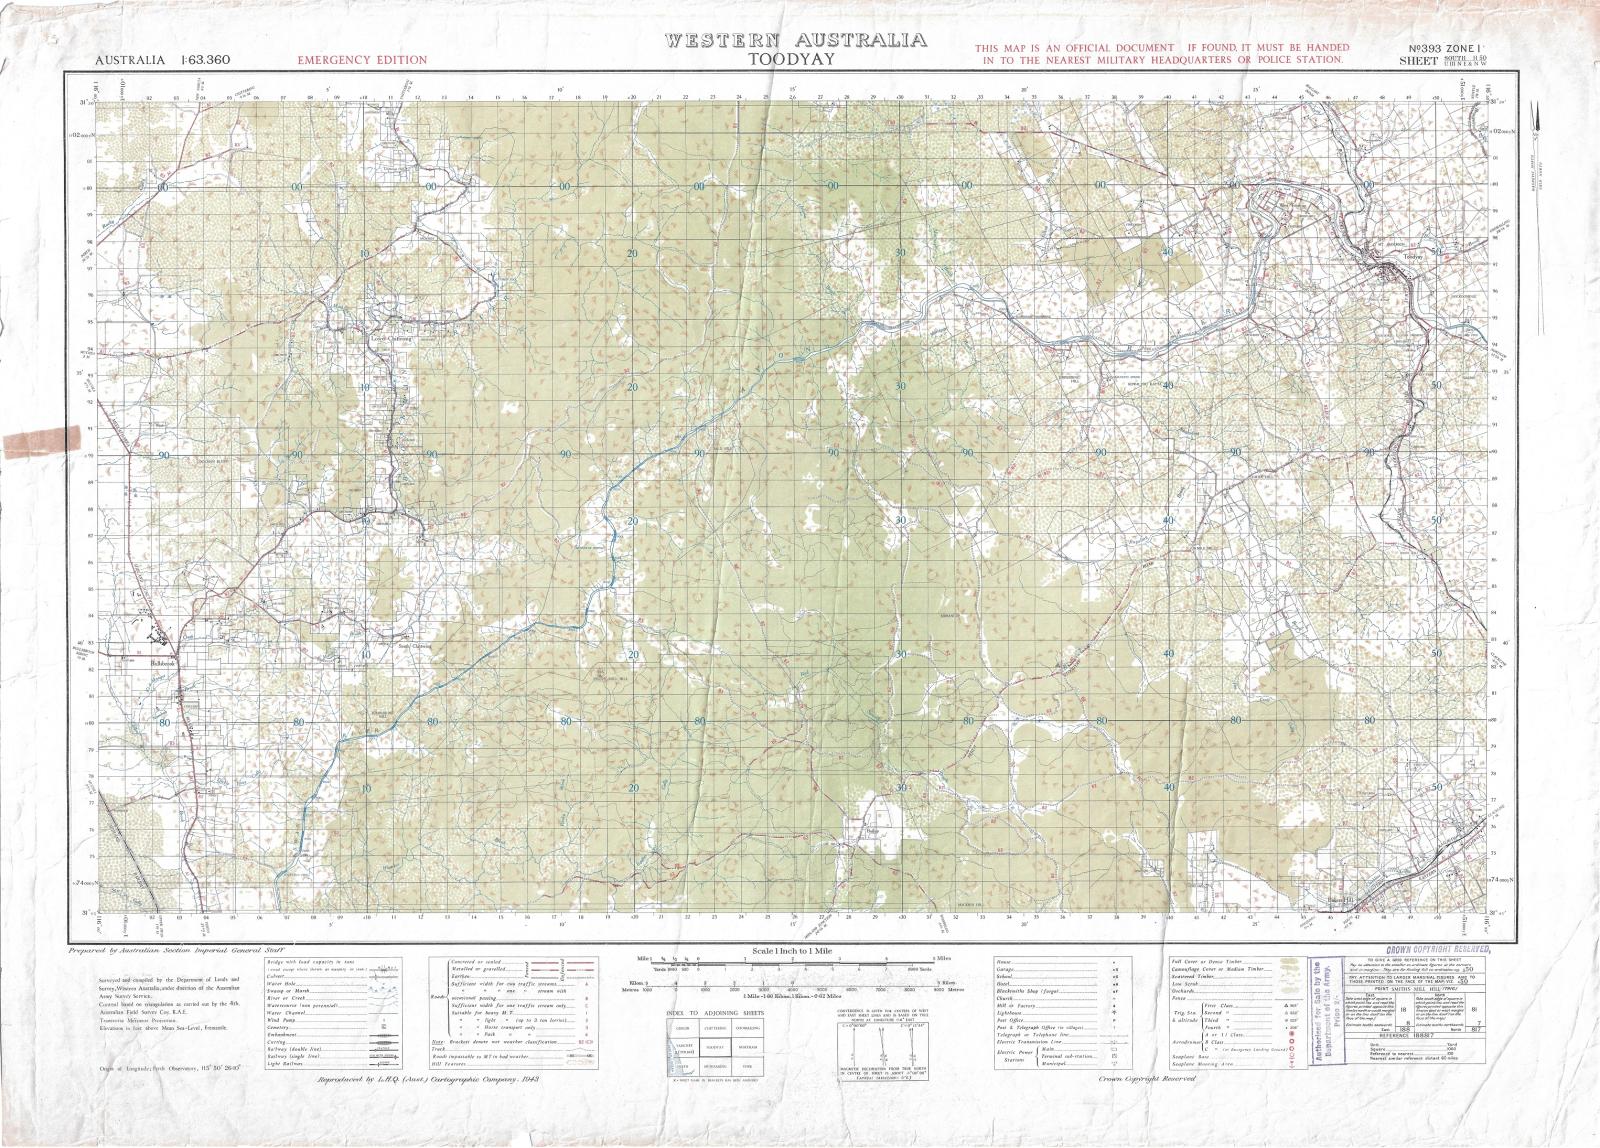 Cadastral / topographic map of Toodyay & Bullsbrook